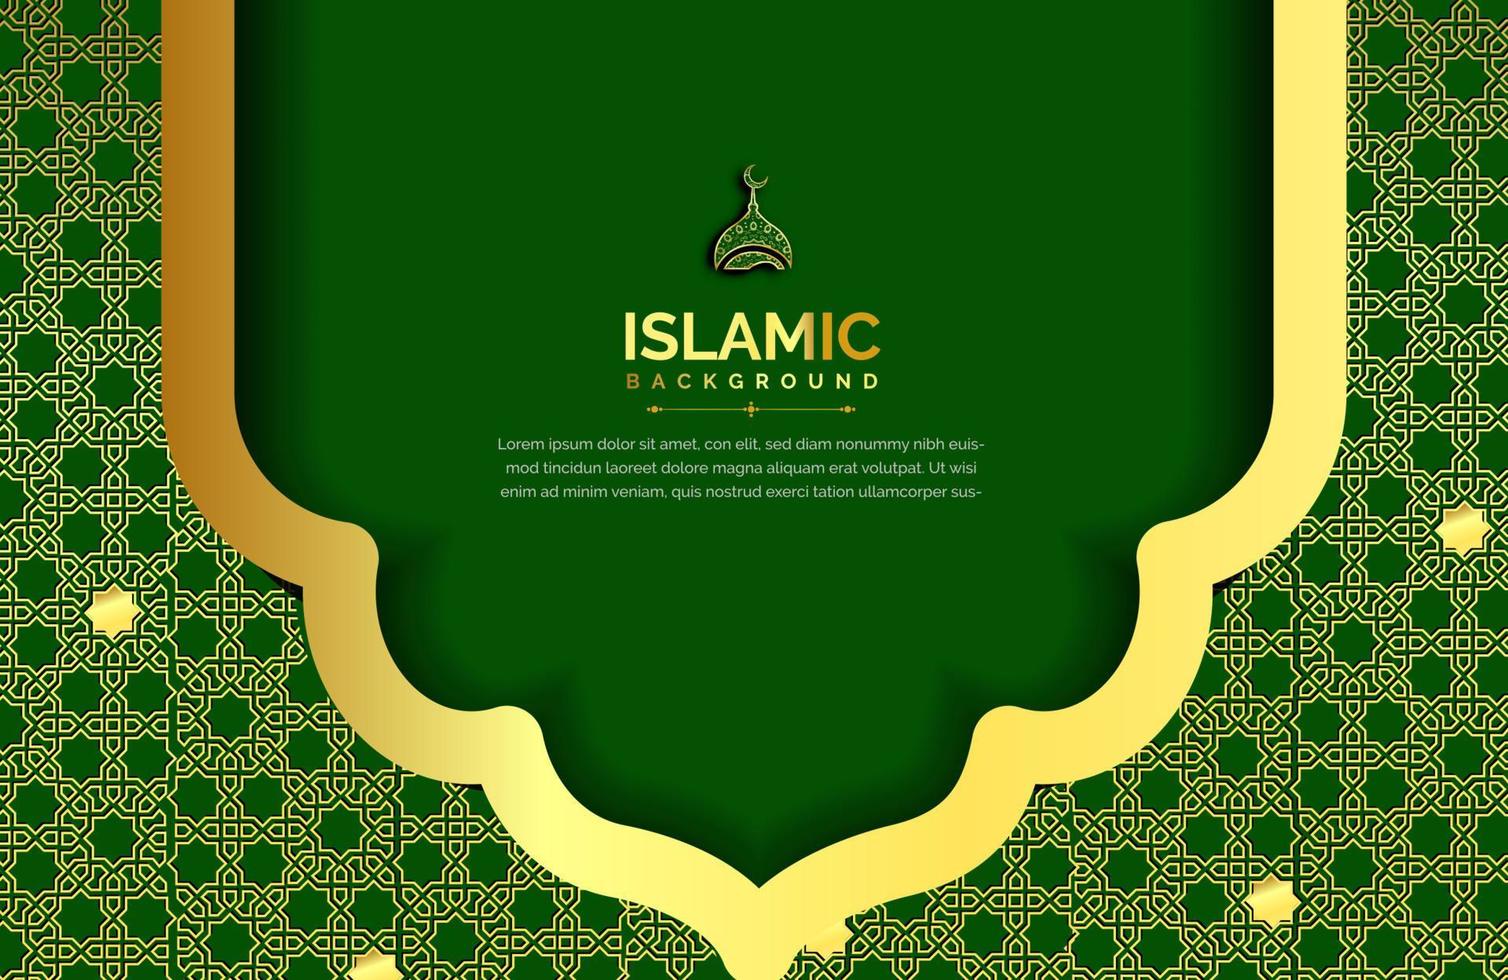 Arabic background in luxury style Vector illustration of dark green islamic design